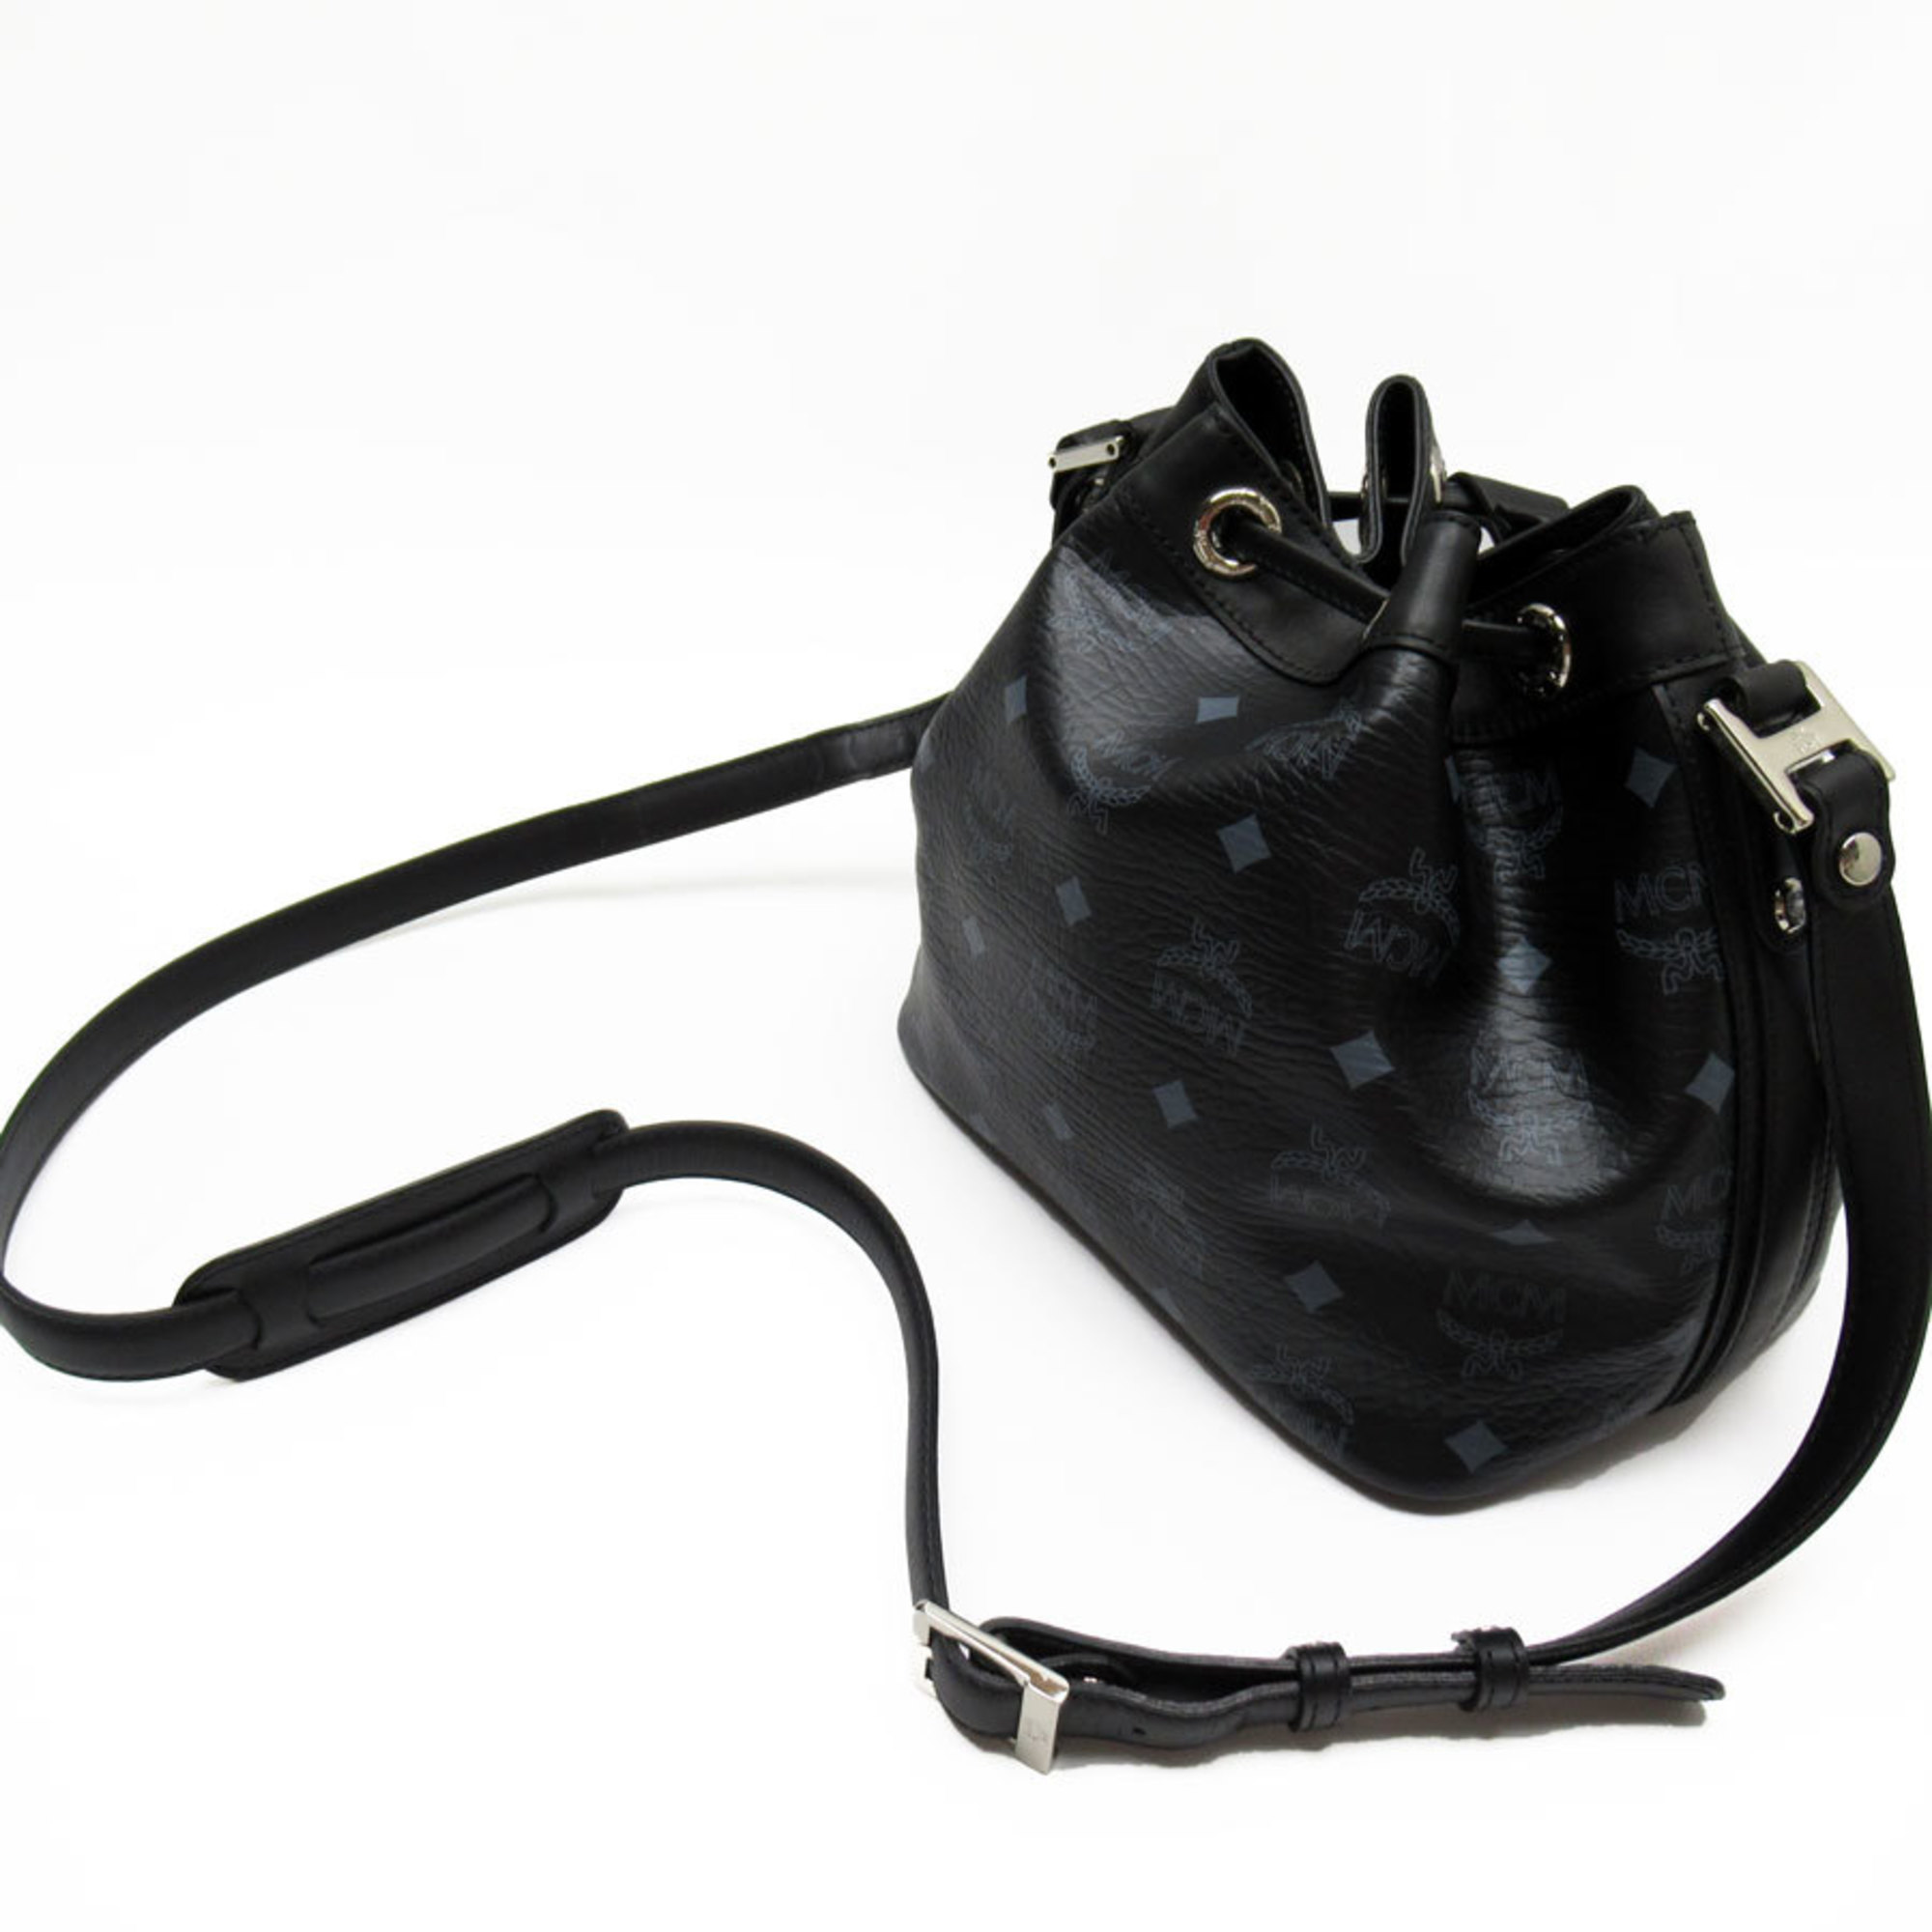 MCM Shoulder Bag Handbag Visetos Drawstrong 2Way Leather Black Grey Women's w0472j